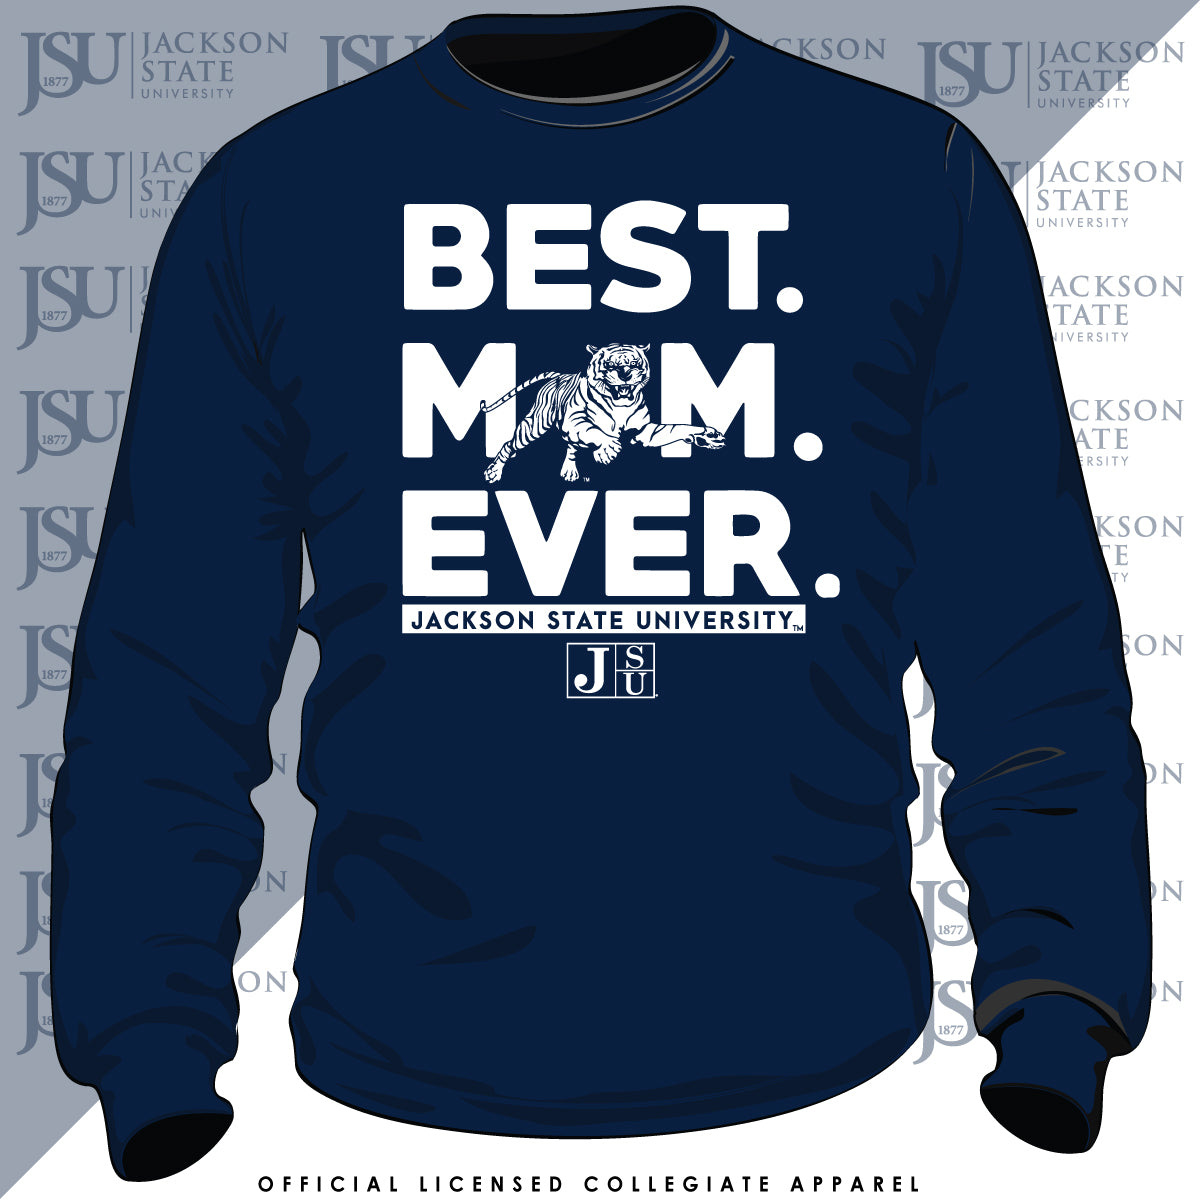 Jackson St. | BEST "MOM" EVER Navy Unisex Tees -Z-